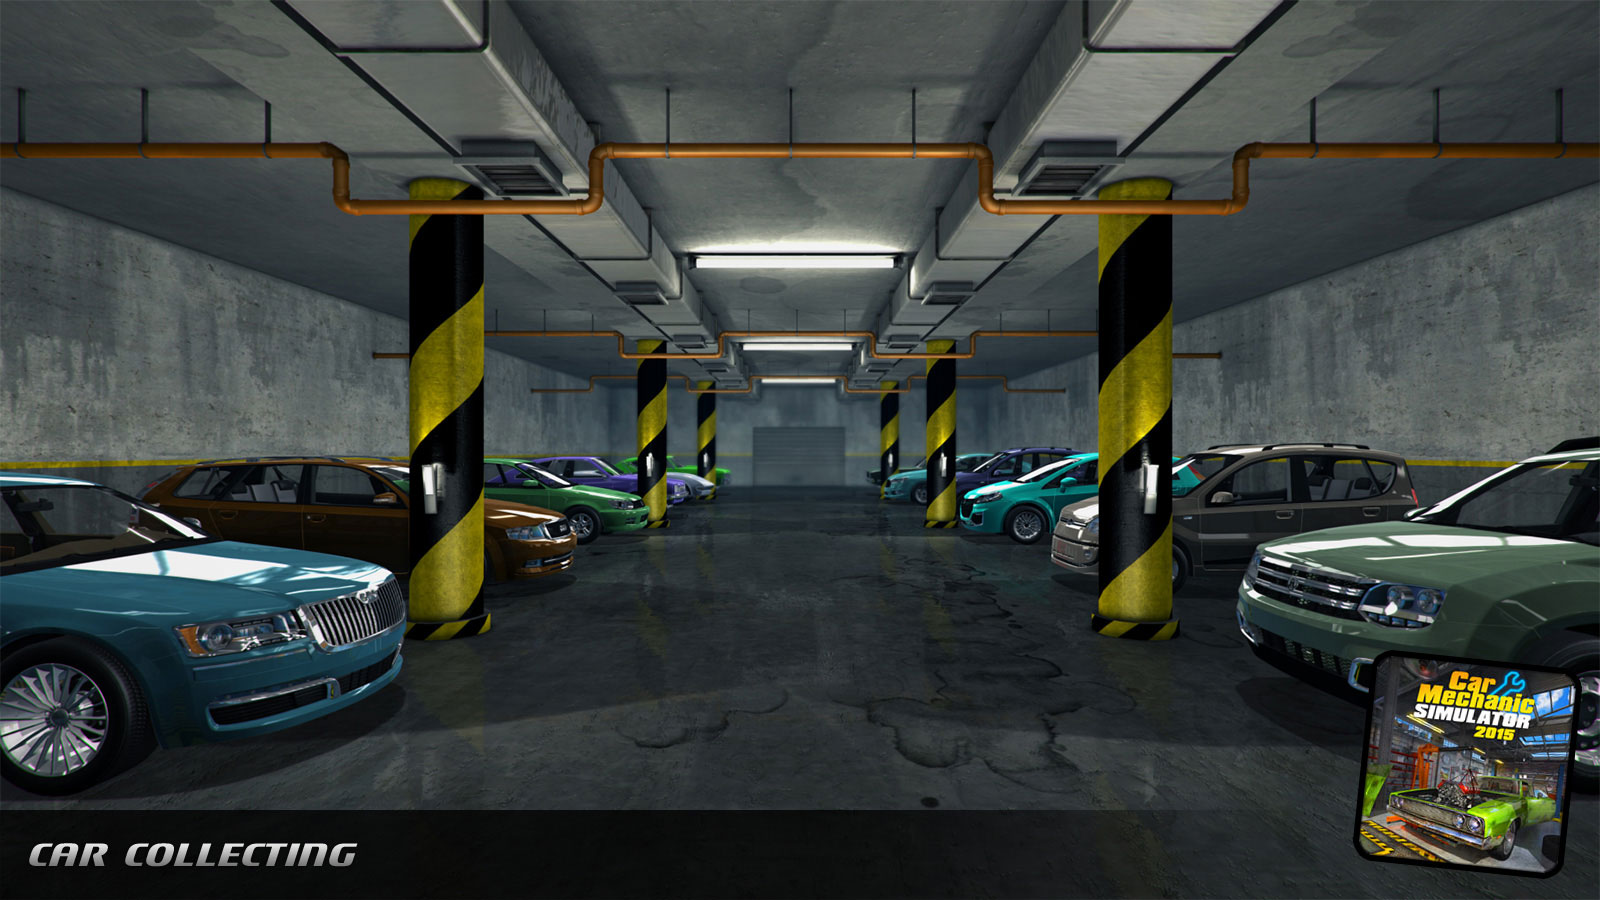 Car Mechanic Simulator 2015 On Steam